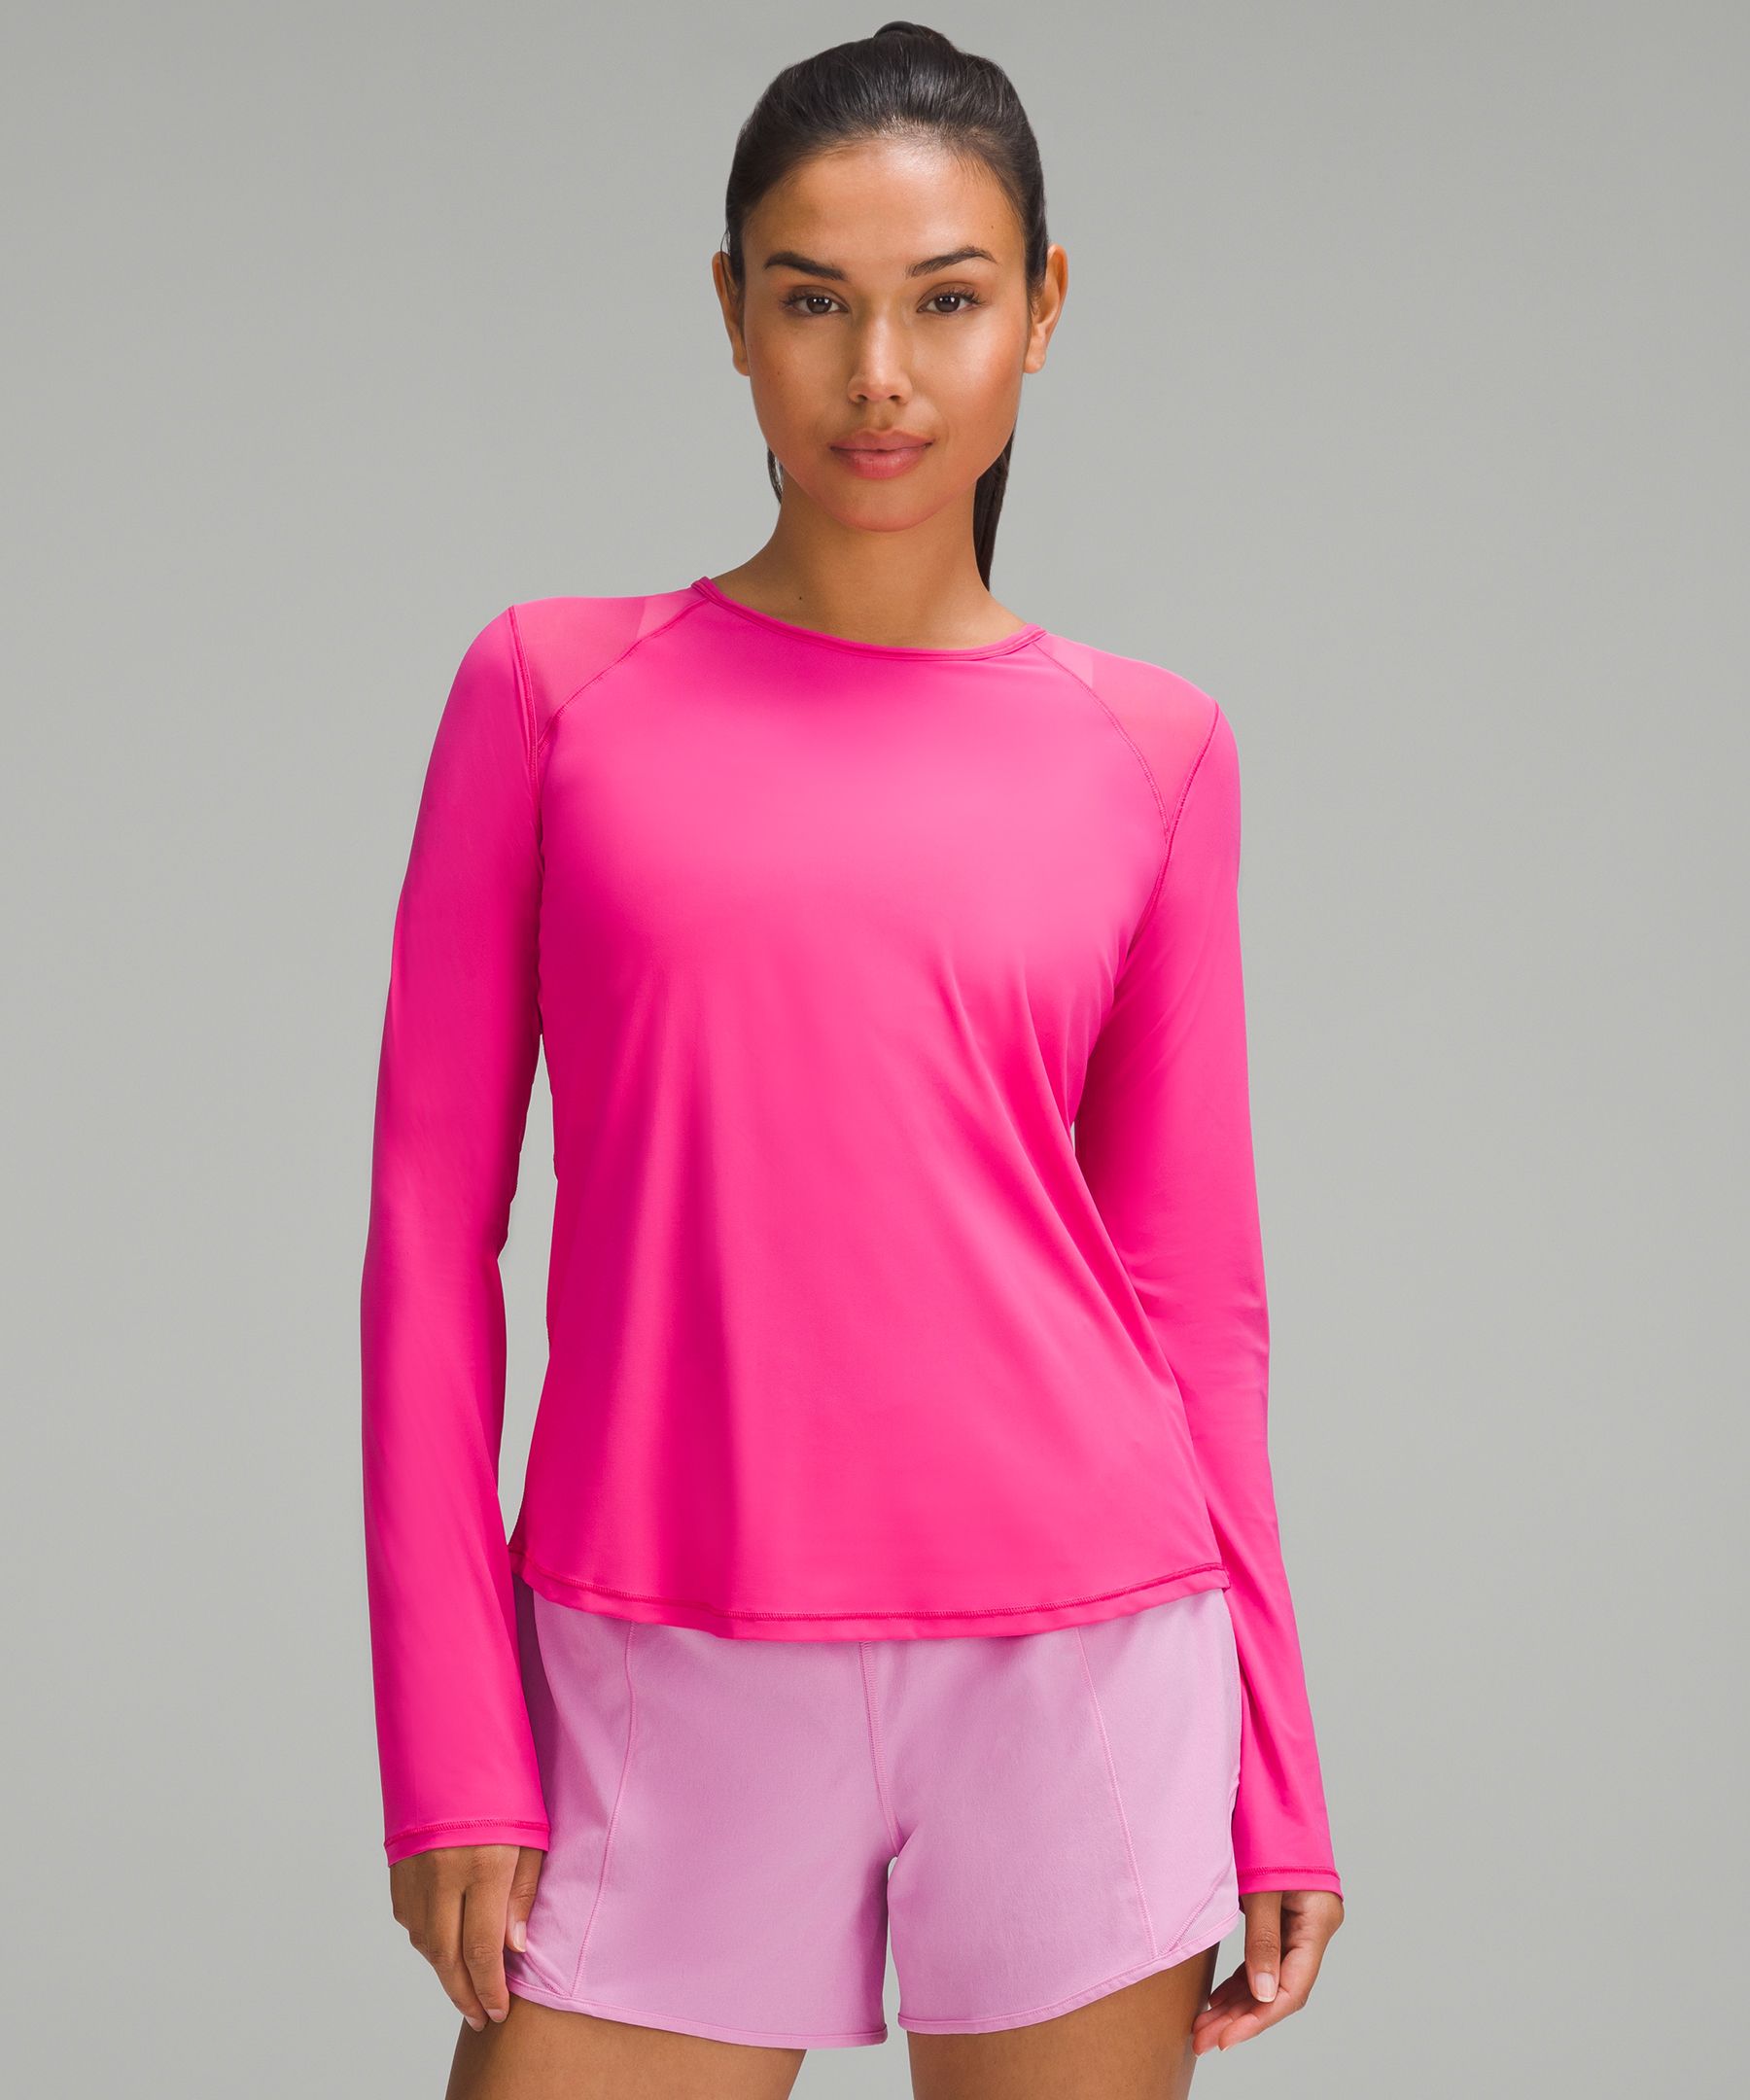 Women's Pink Long Sleeve Shirts